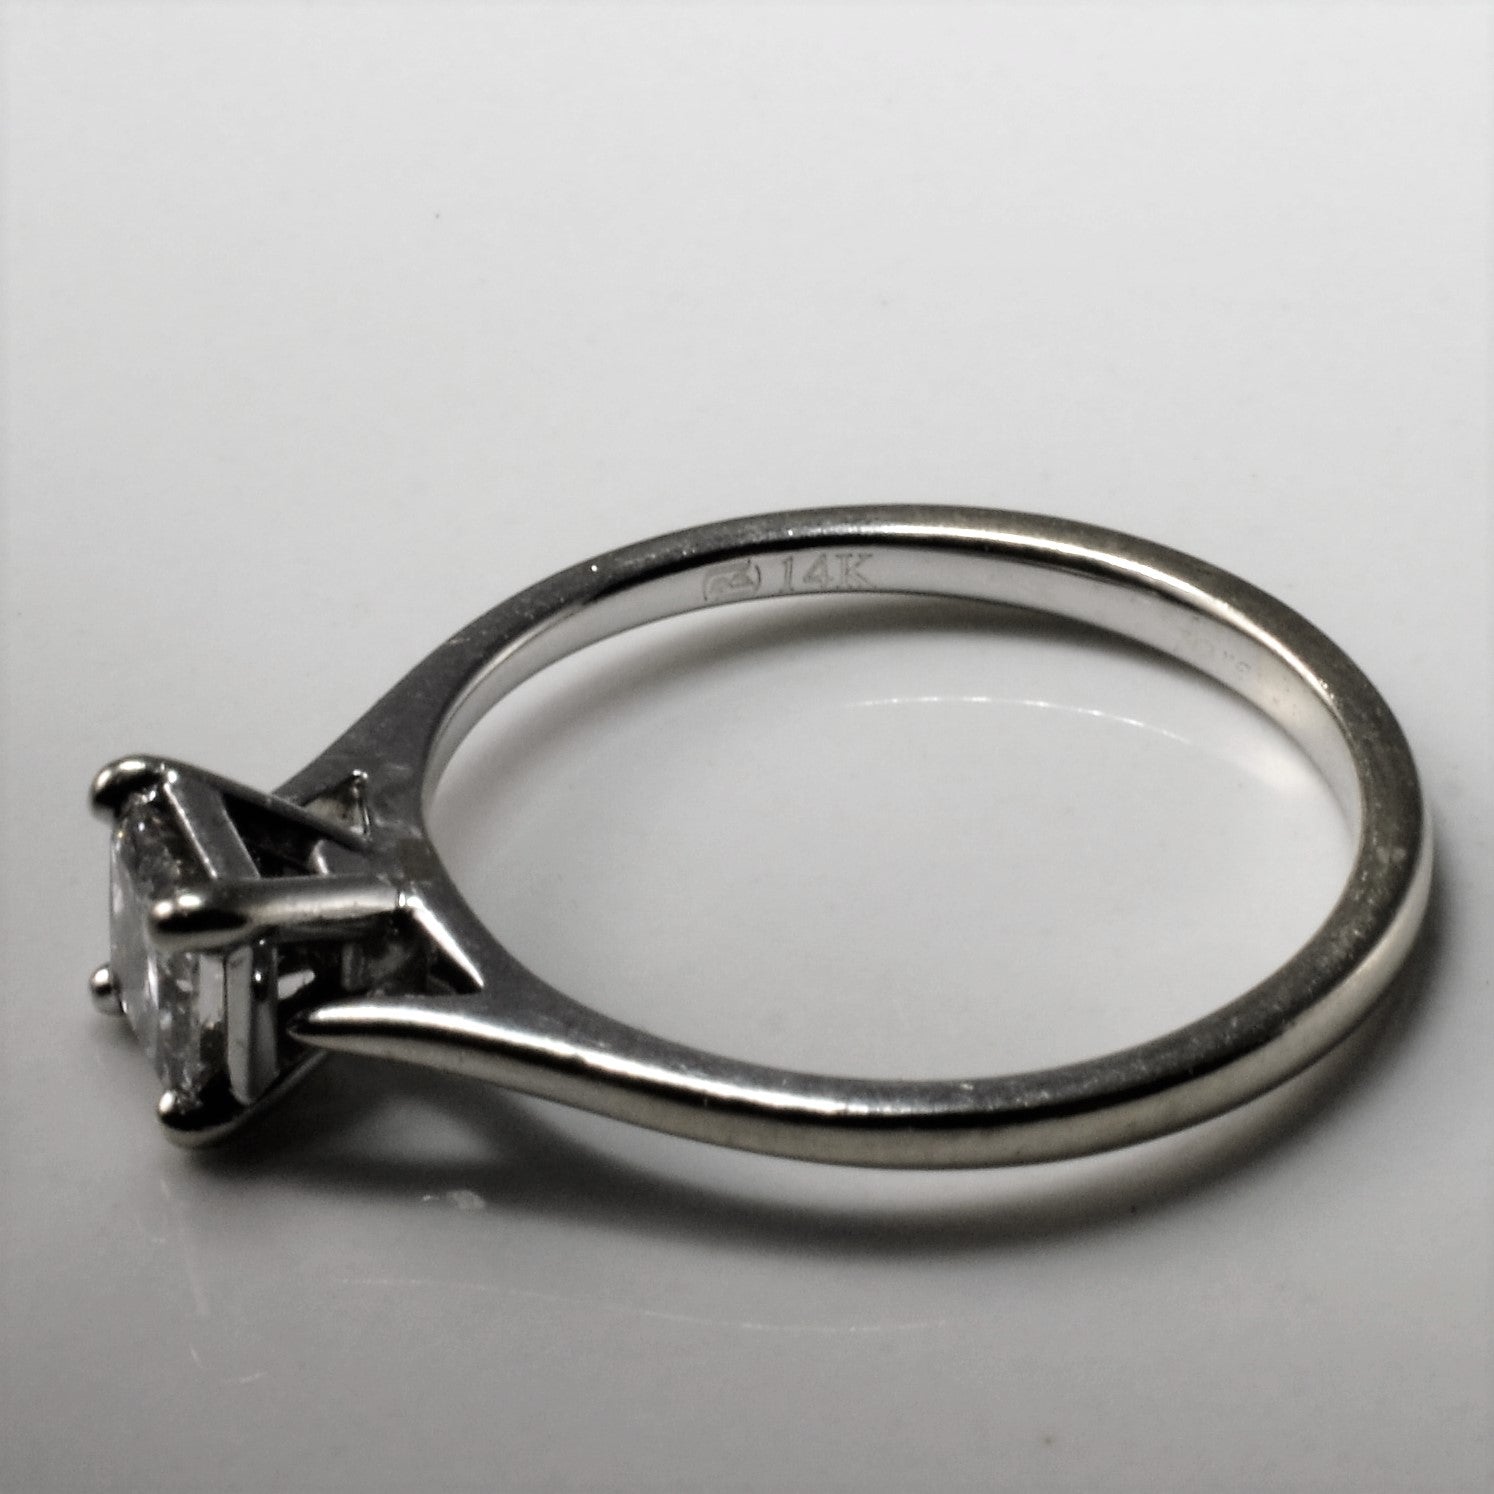 Princess Cut Solitaire Diamond Ring | 0.51ct | SZ 6.5 |